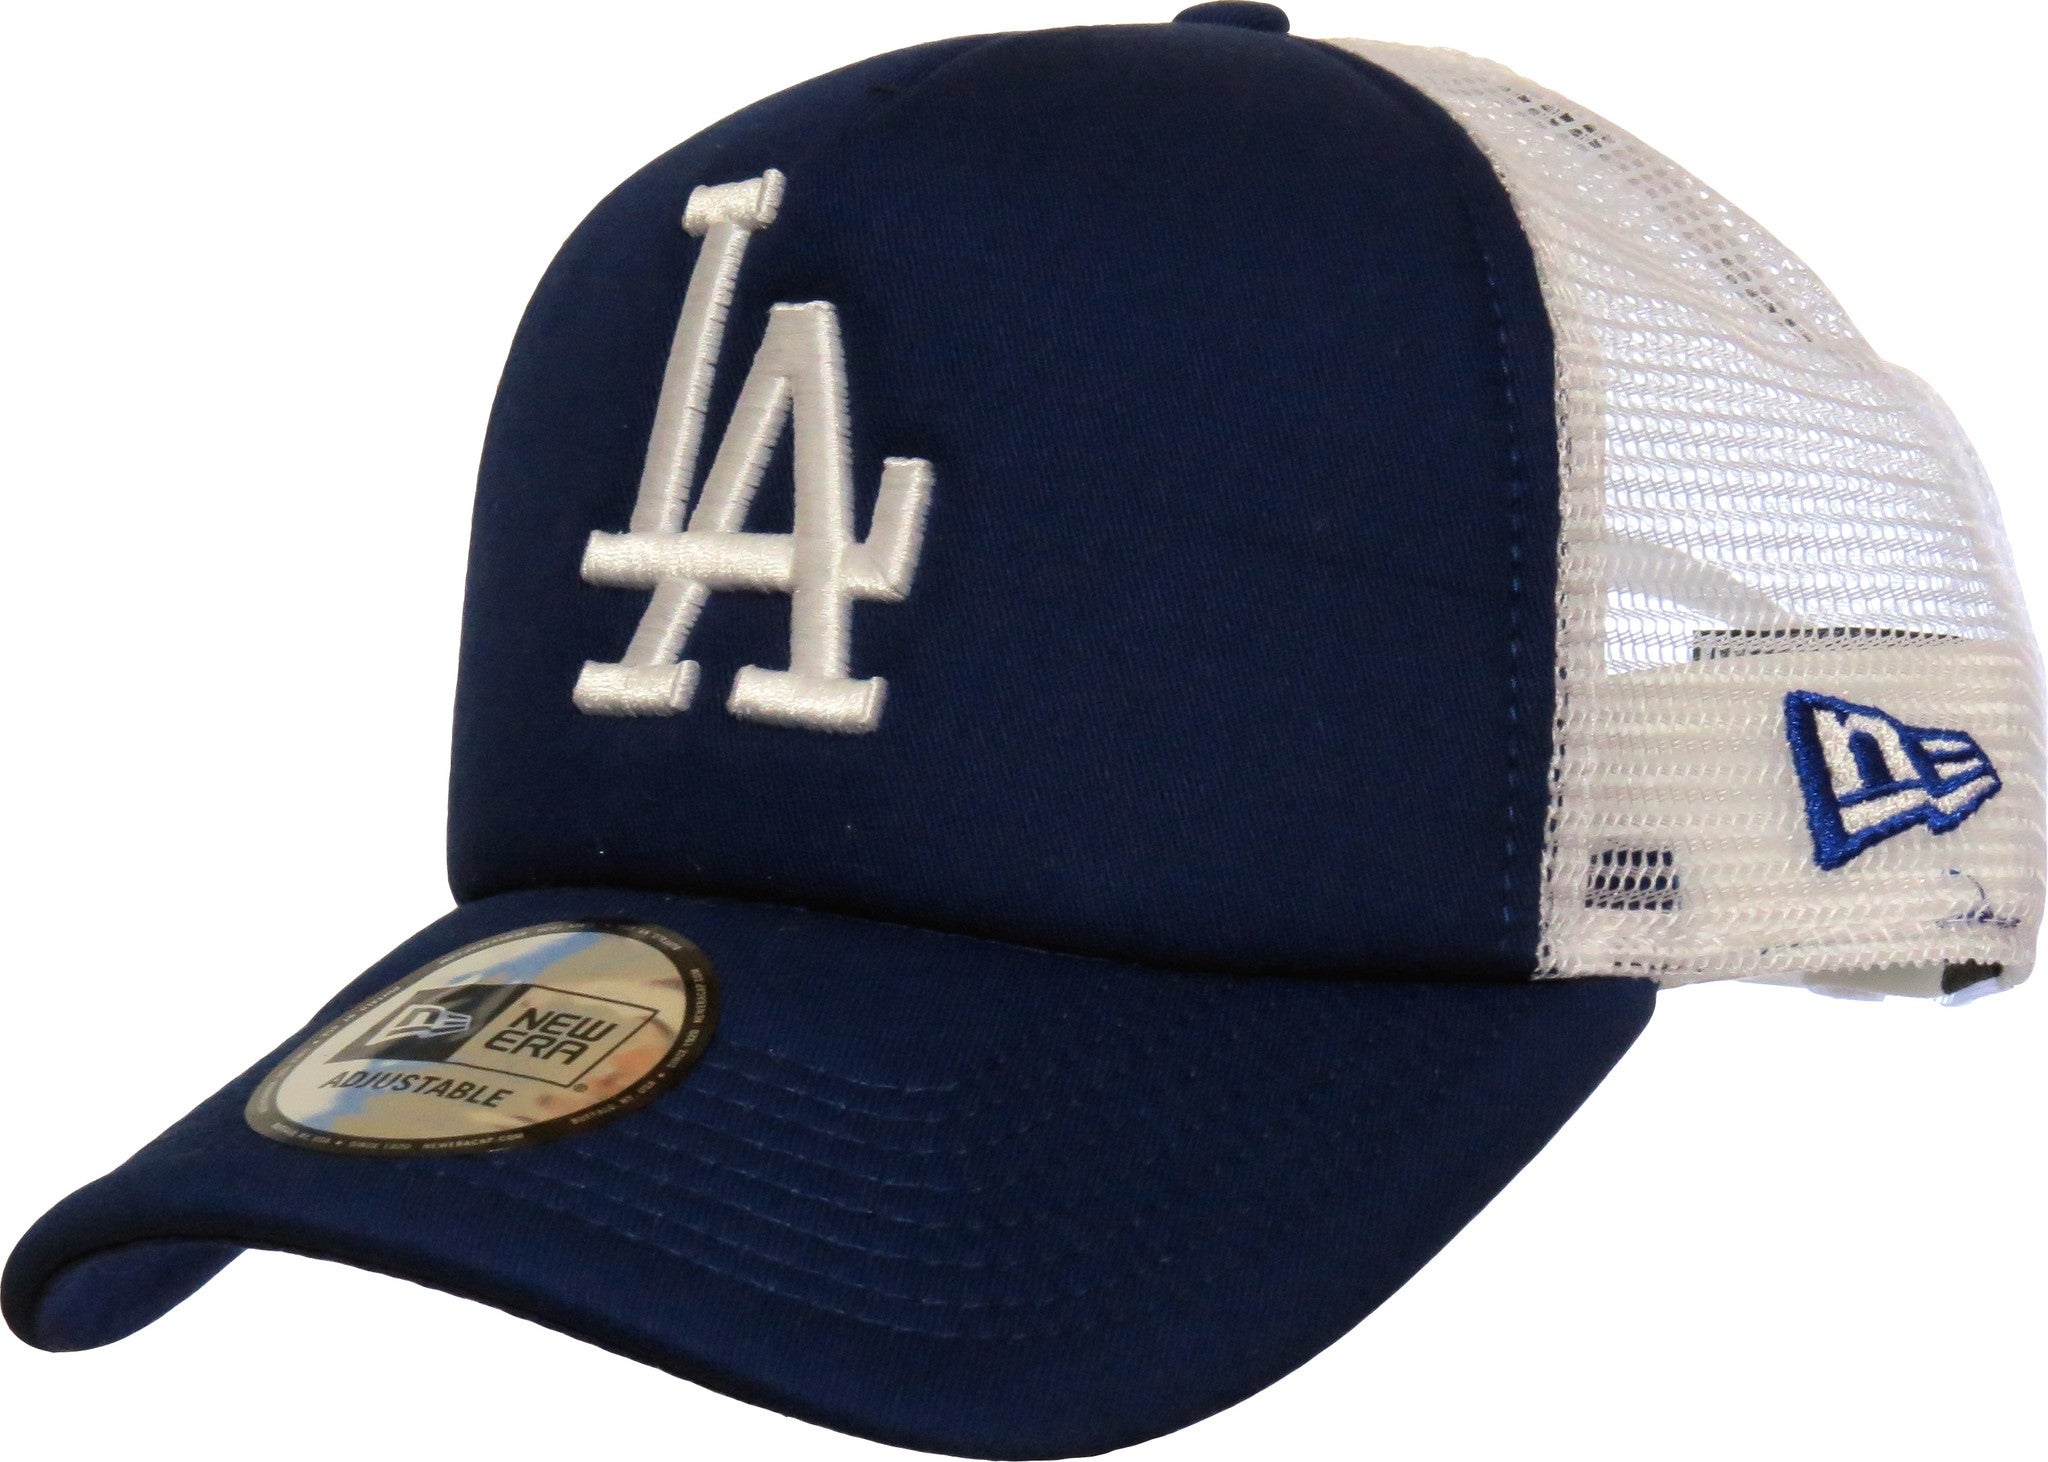 MLB Hat - Los Angeles Dodgers